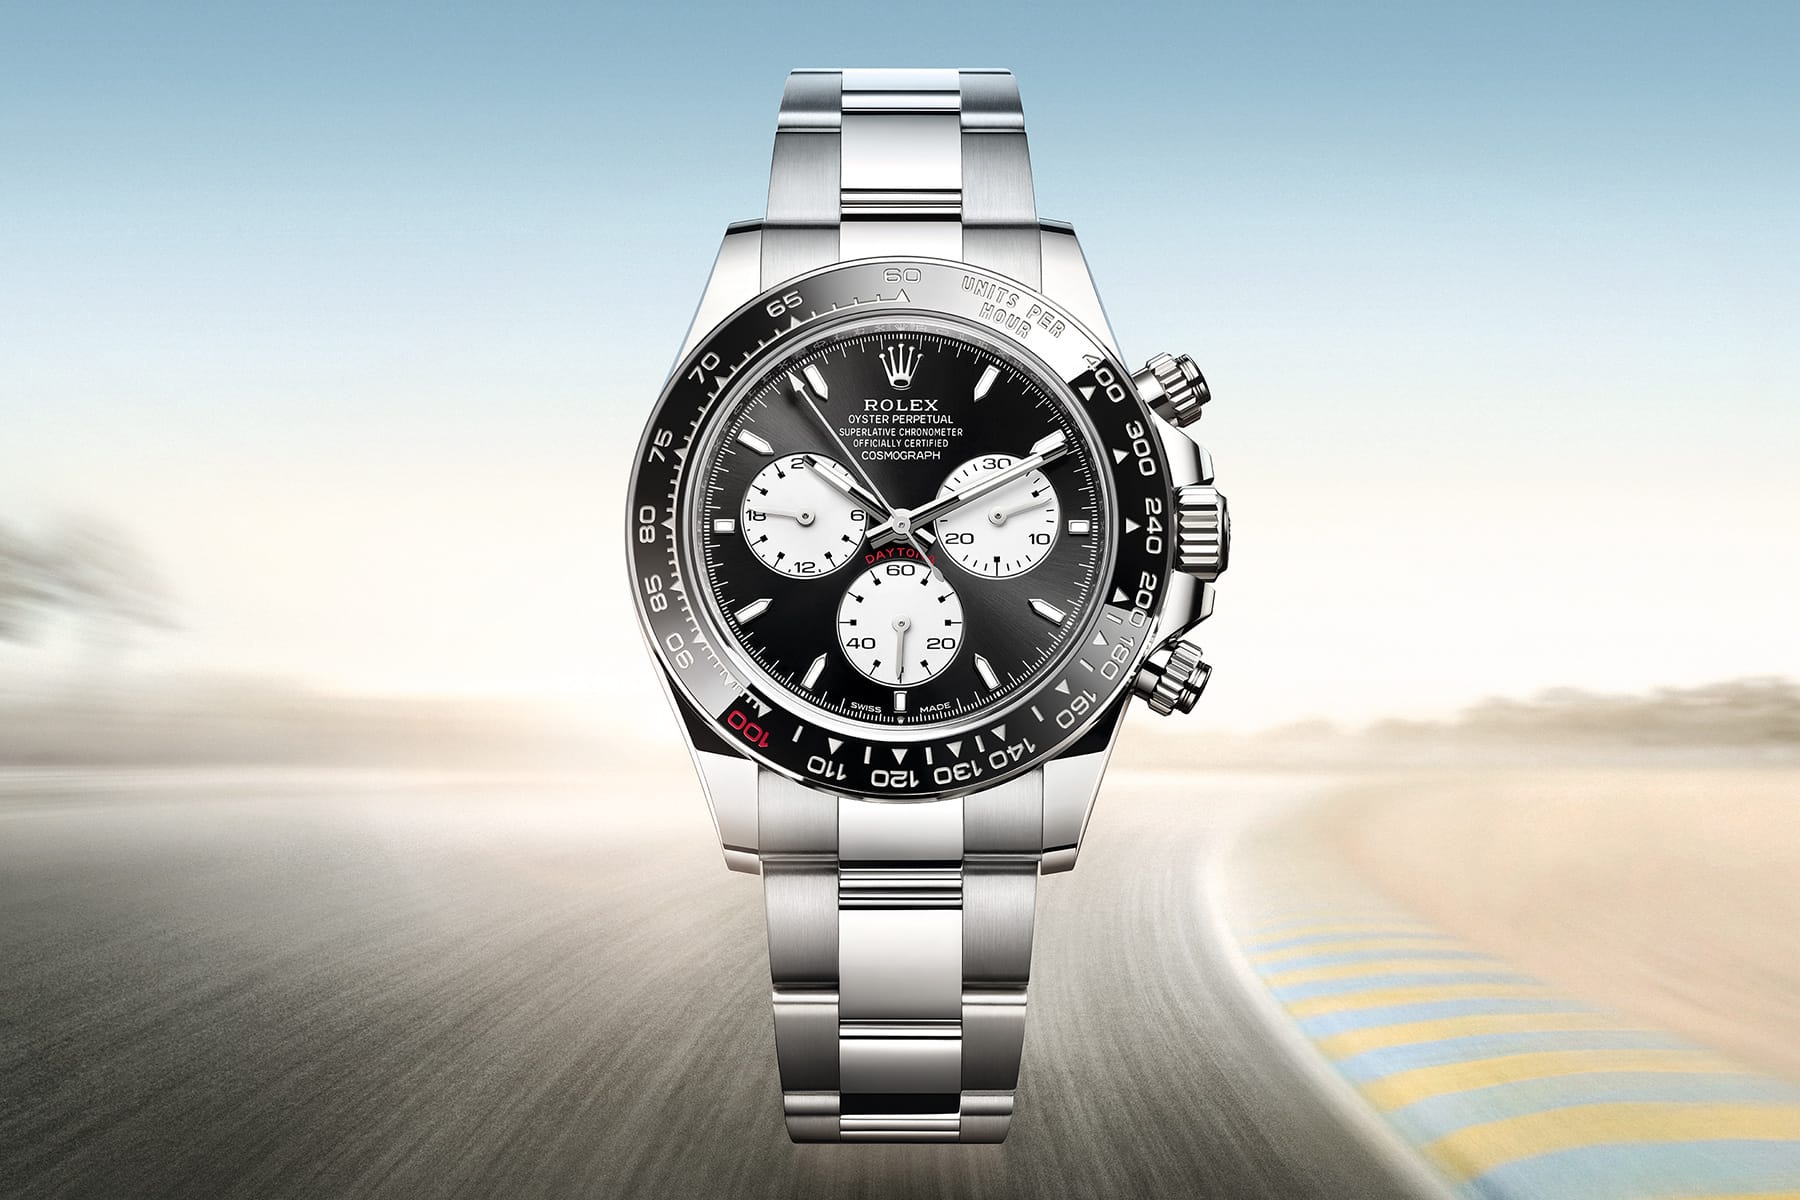 Rolex Daytona 正式發表24 Hours of Le Mans 賽事100 周年紀念錶款